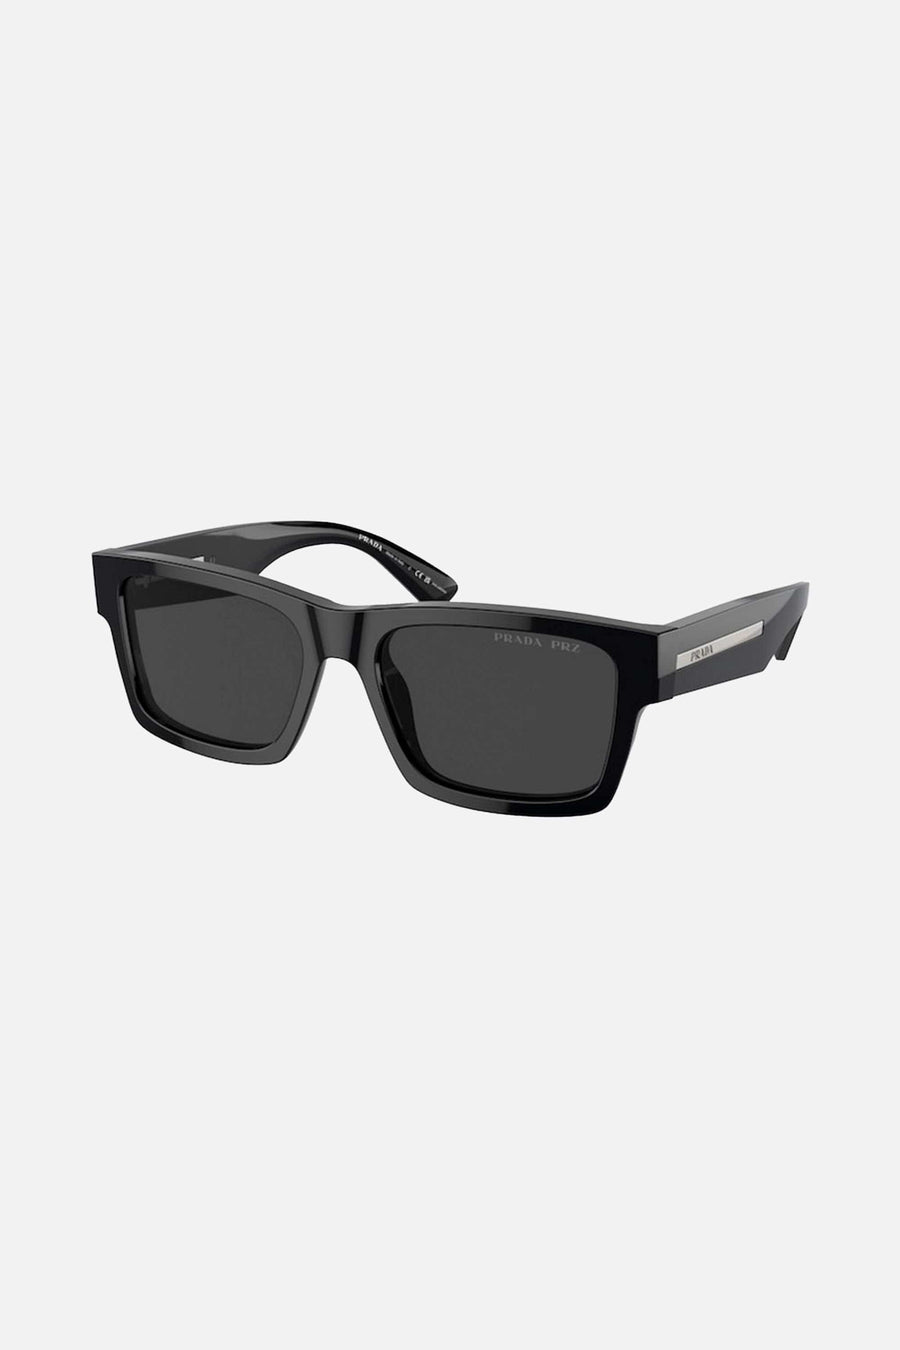 Prada black aquared sunglasses